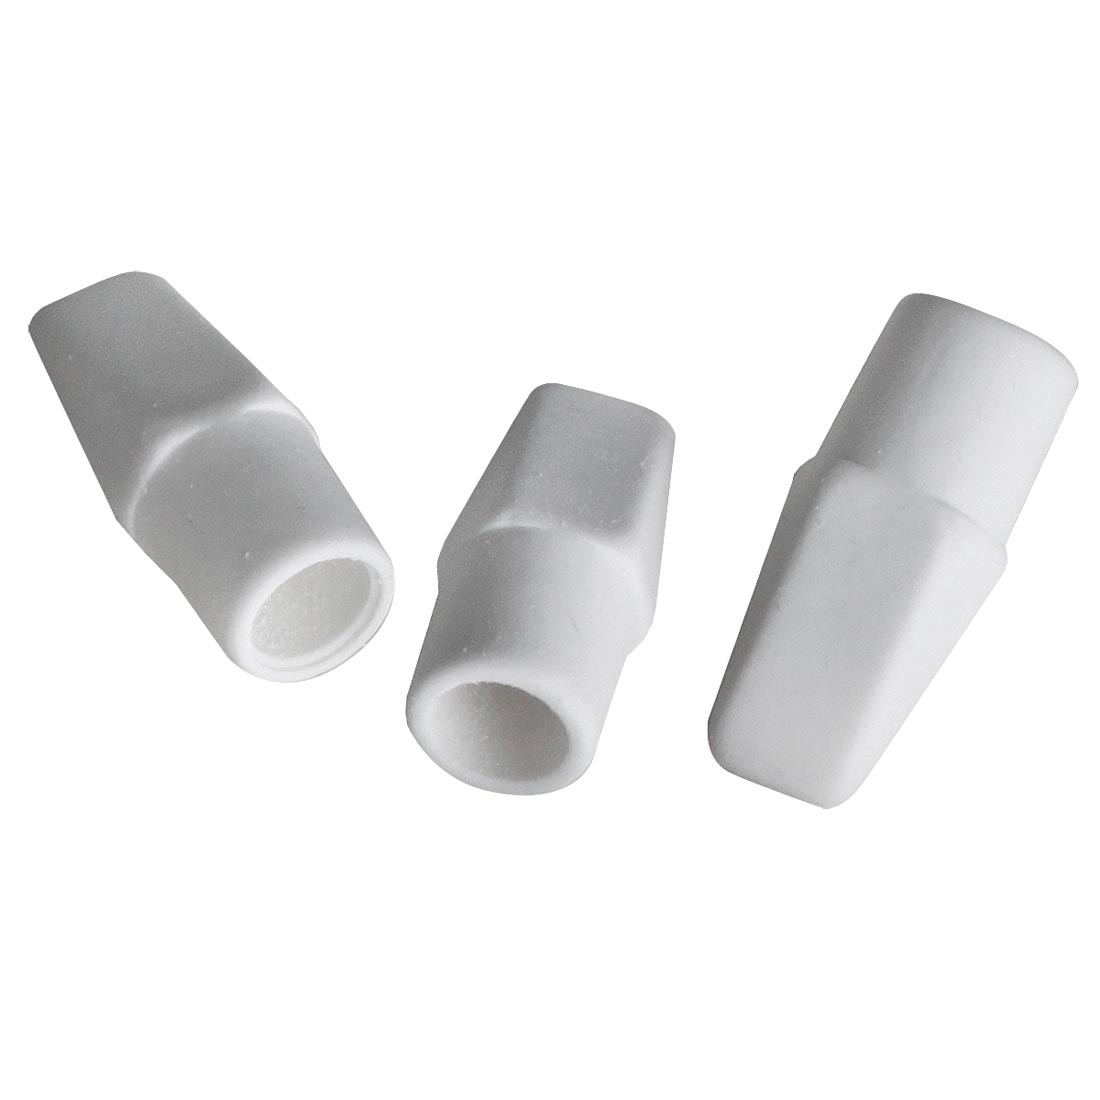 Three Helix Hi-Polymer Eraser Caps